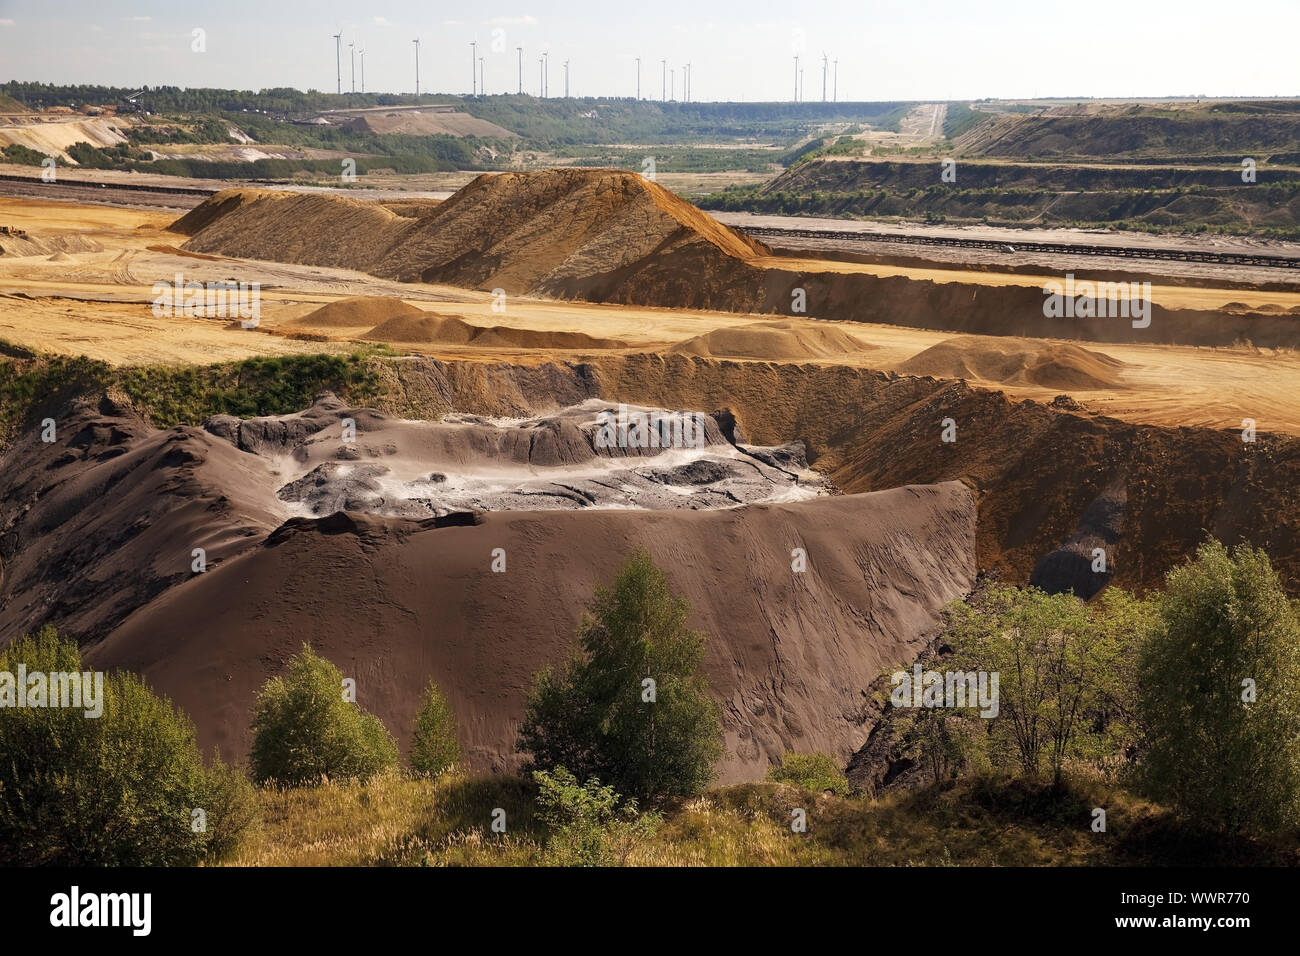 brown coal mining area Garzweiler I, Juechen, North Rhine-Westphalia, Germany, Europe Stock Photo